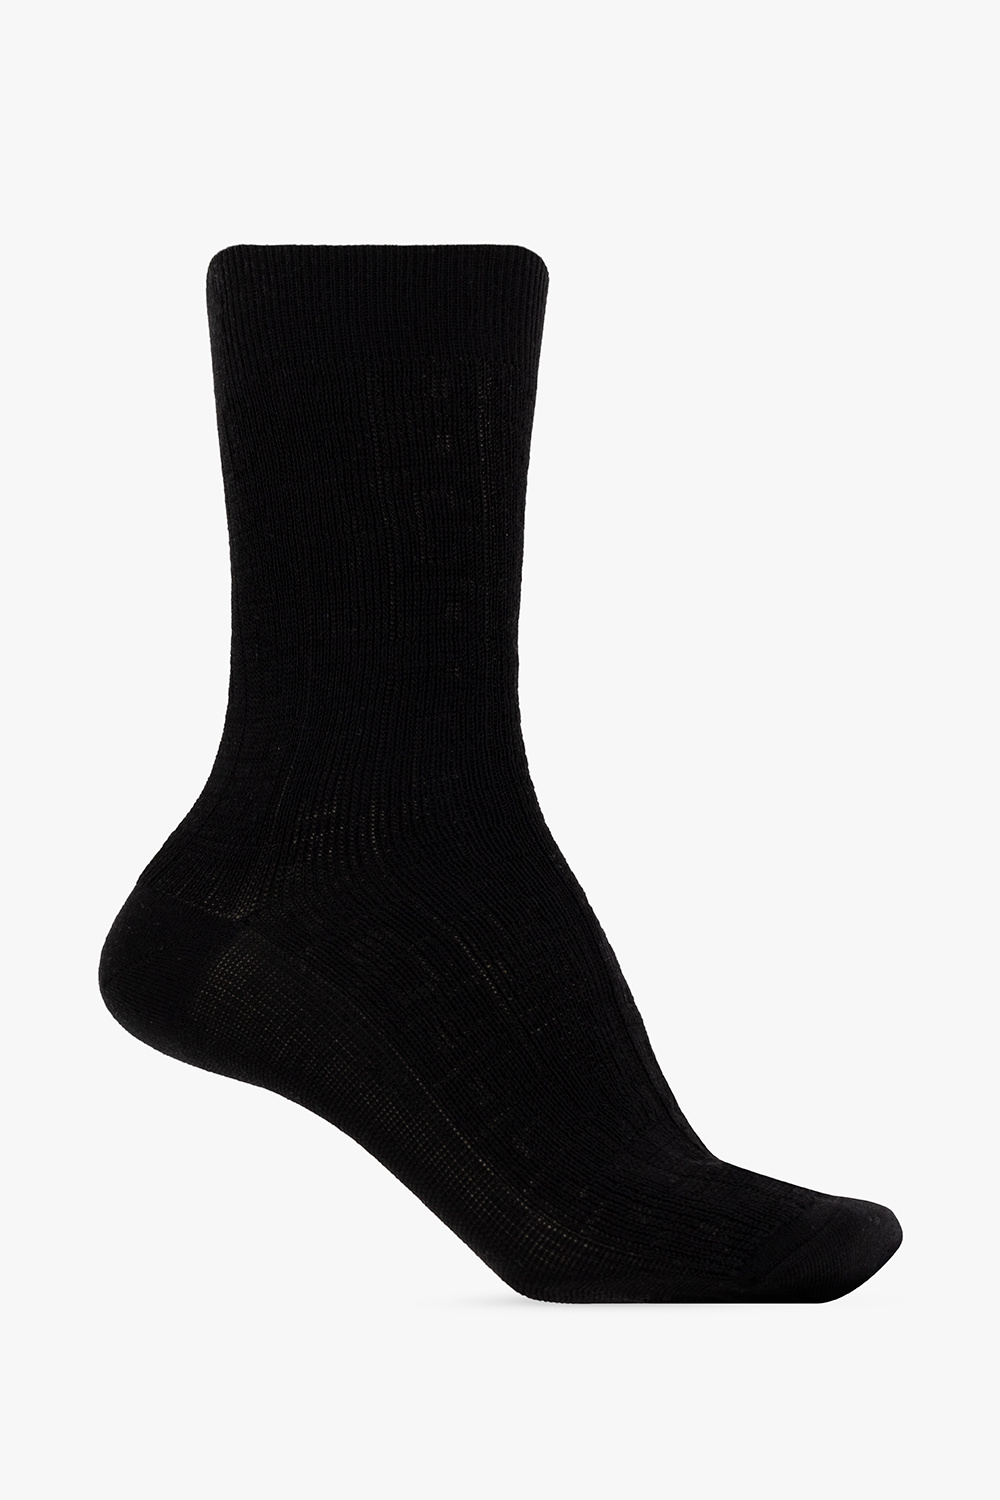 givenchy wide Patterned socks